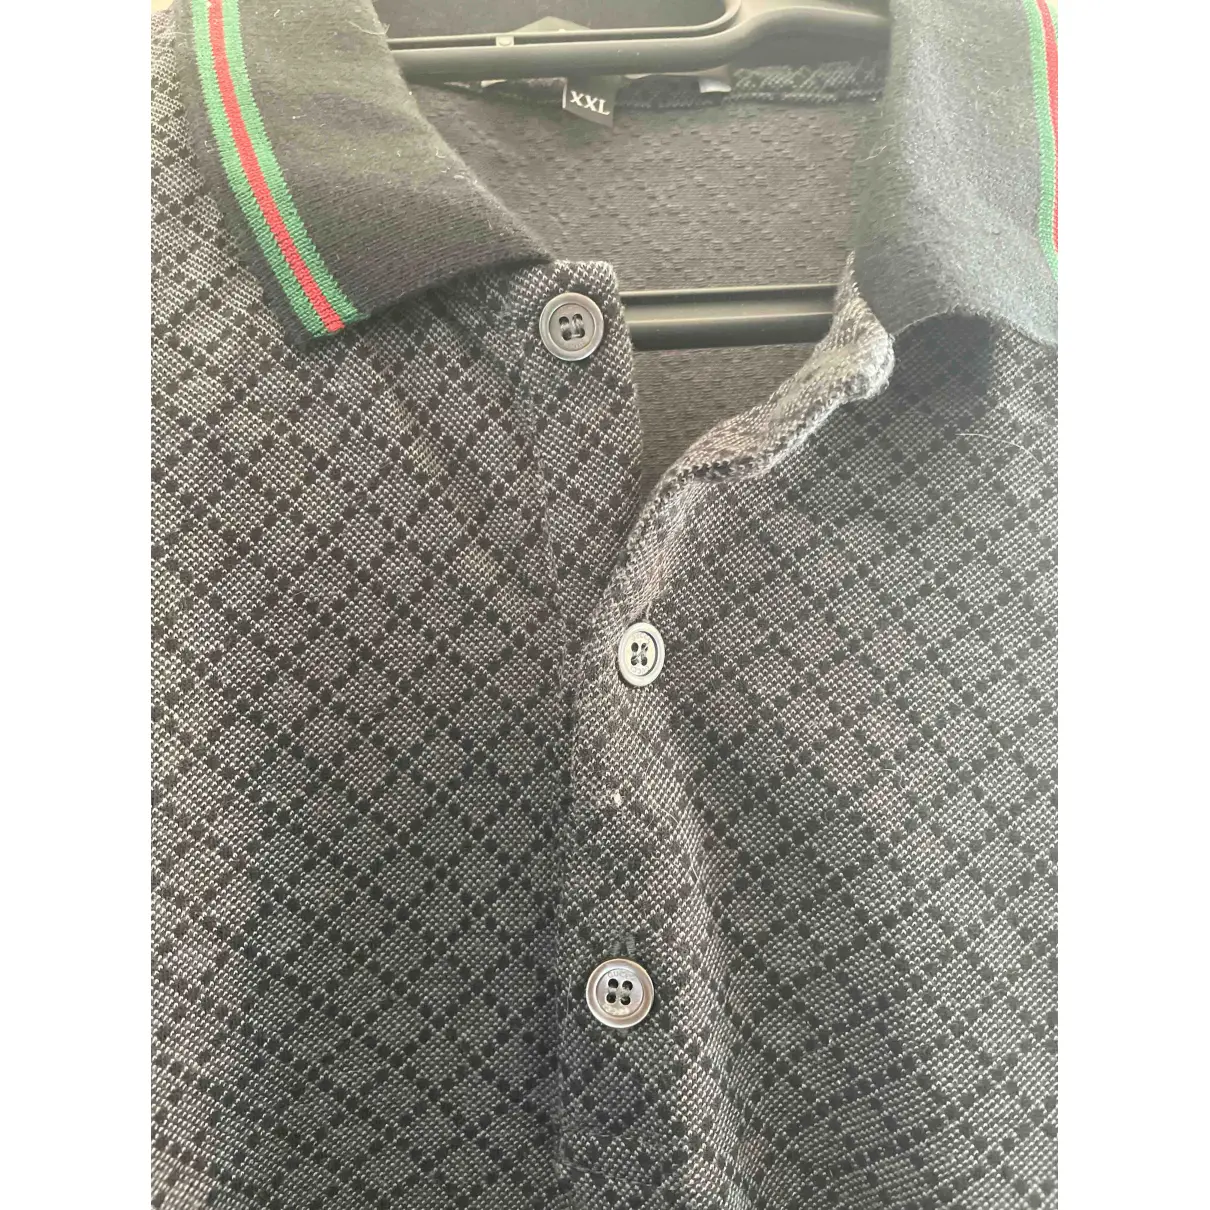 Polo shirt Gucci - Vintage